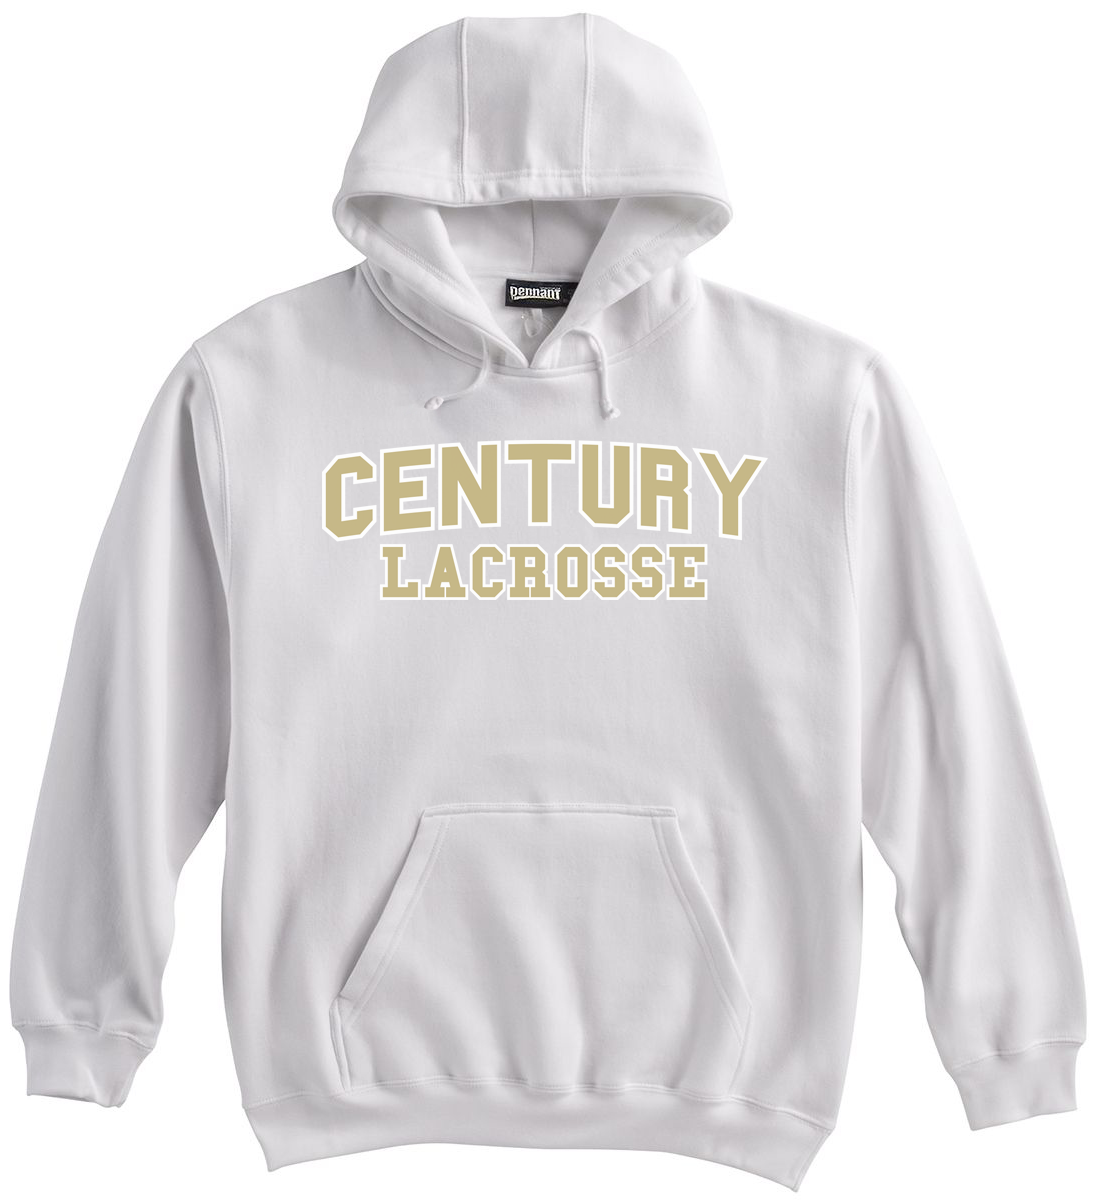 Century Lacrosse White Sweatshirt